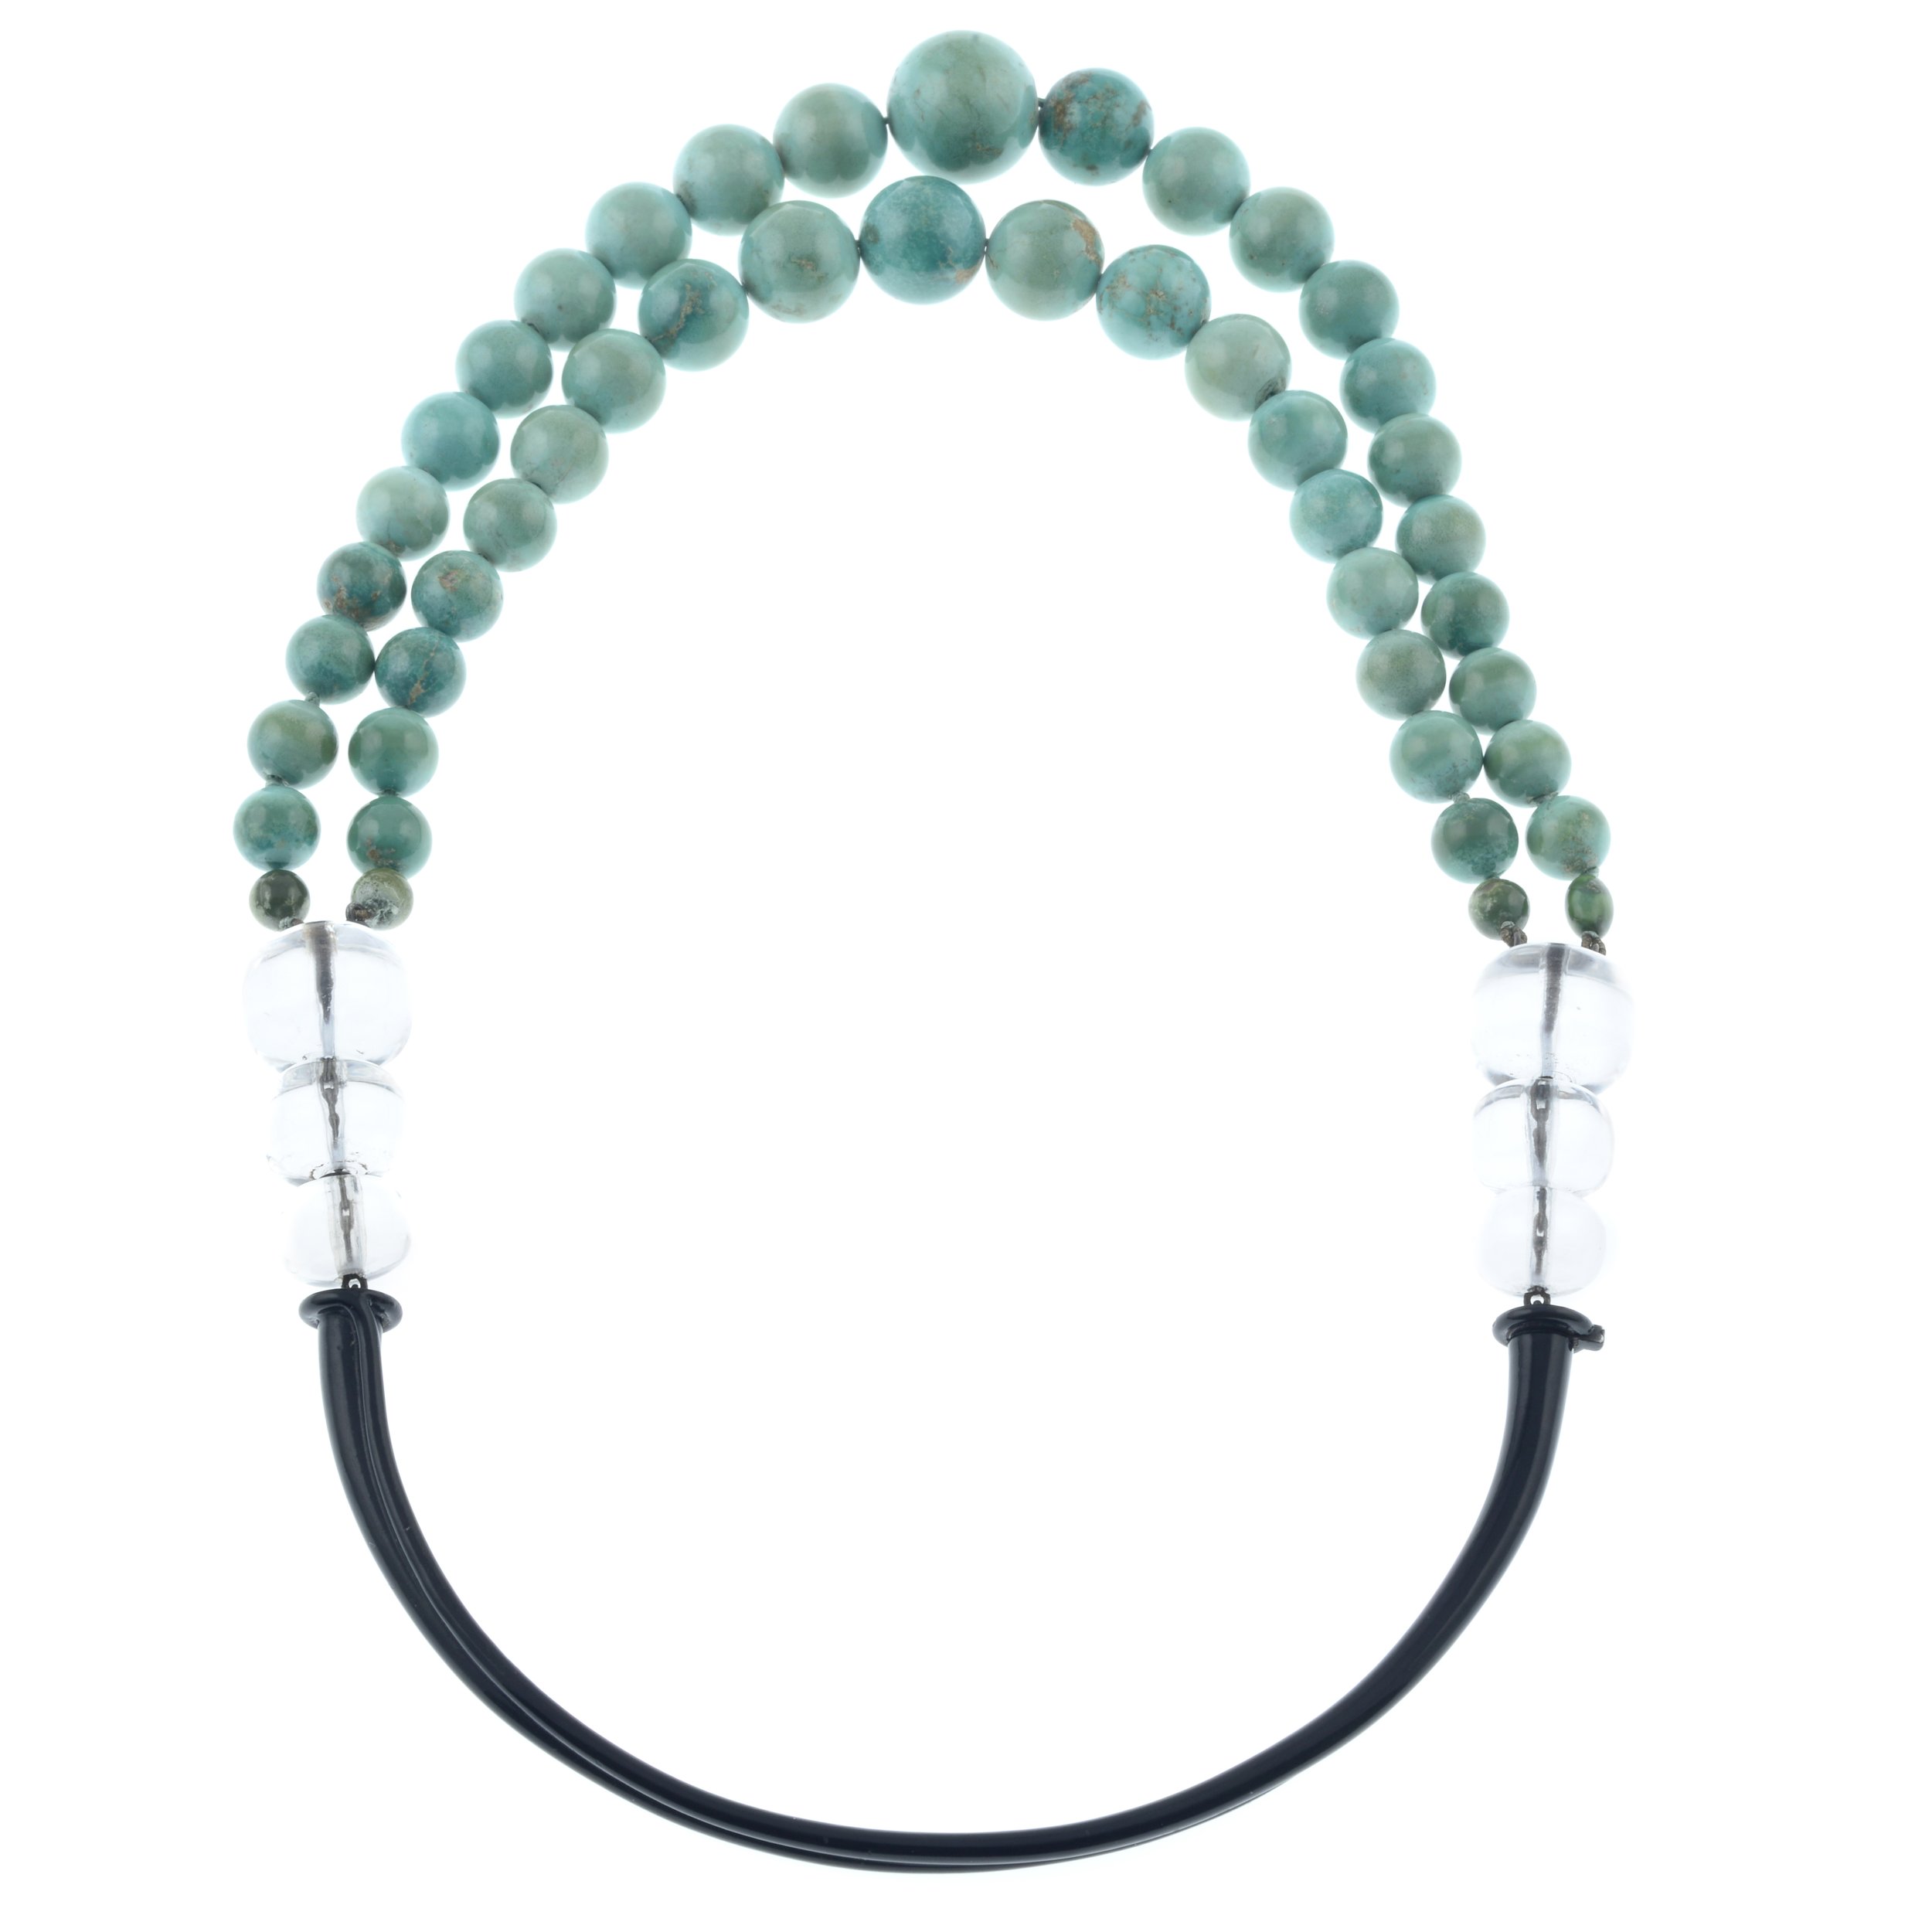 Boivin necklace (3).JPG